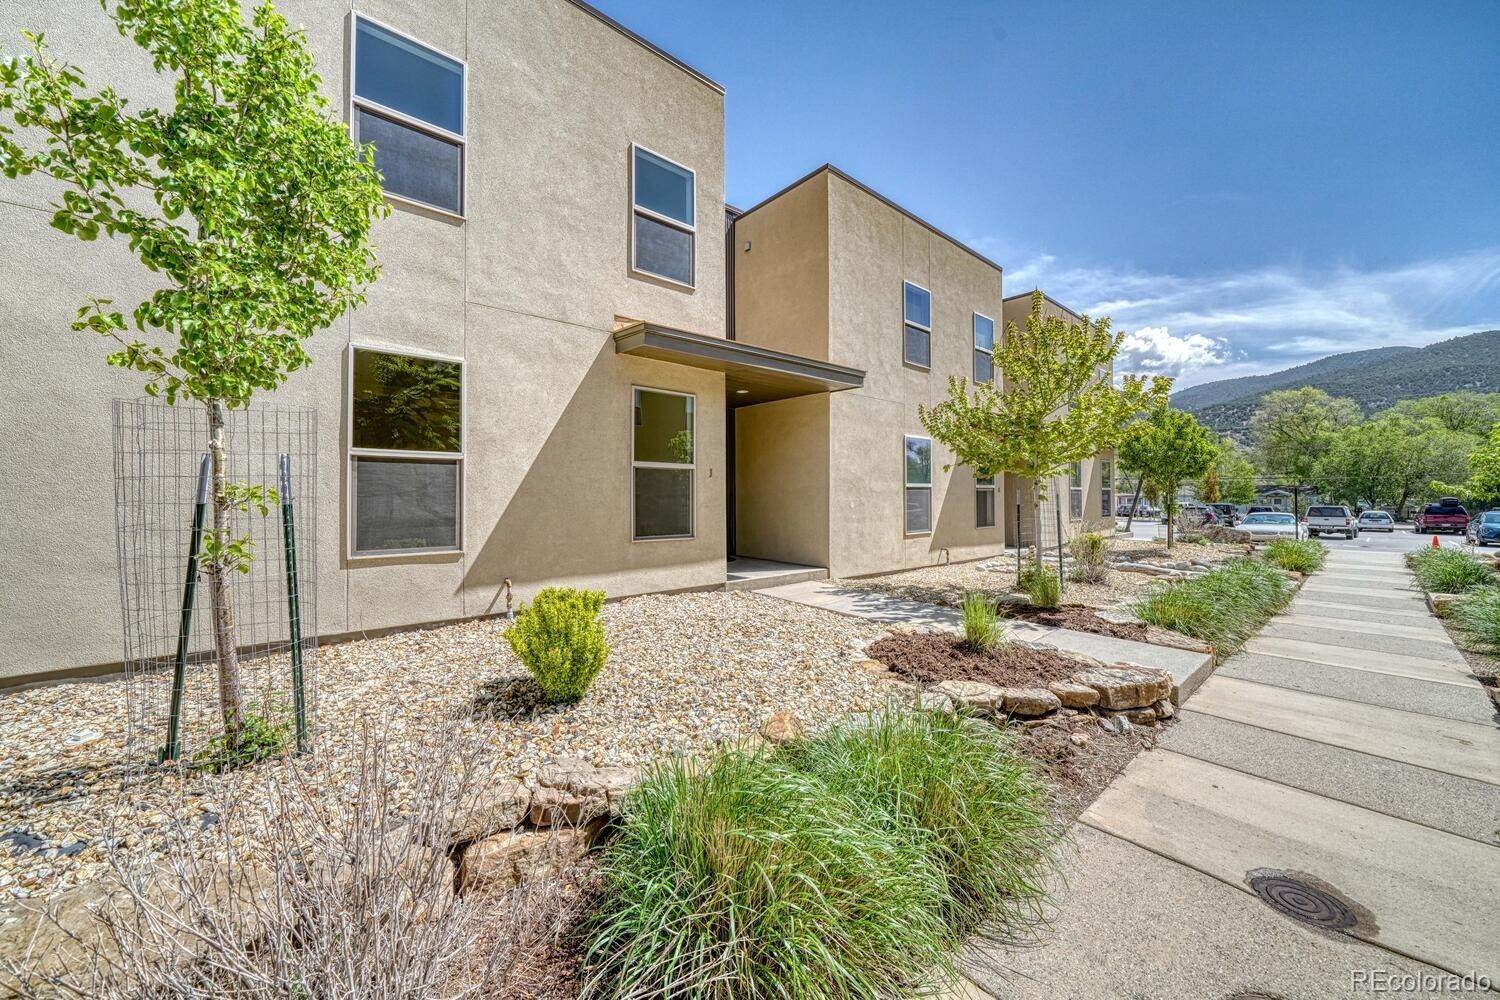 2. Single Family Homes for Sale at 728 Oak Street #J Salida, Colorado 81201 United States